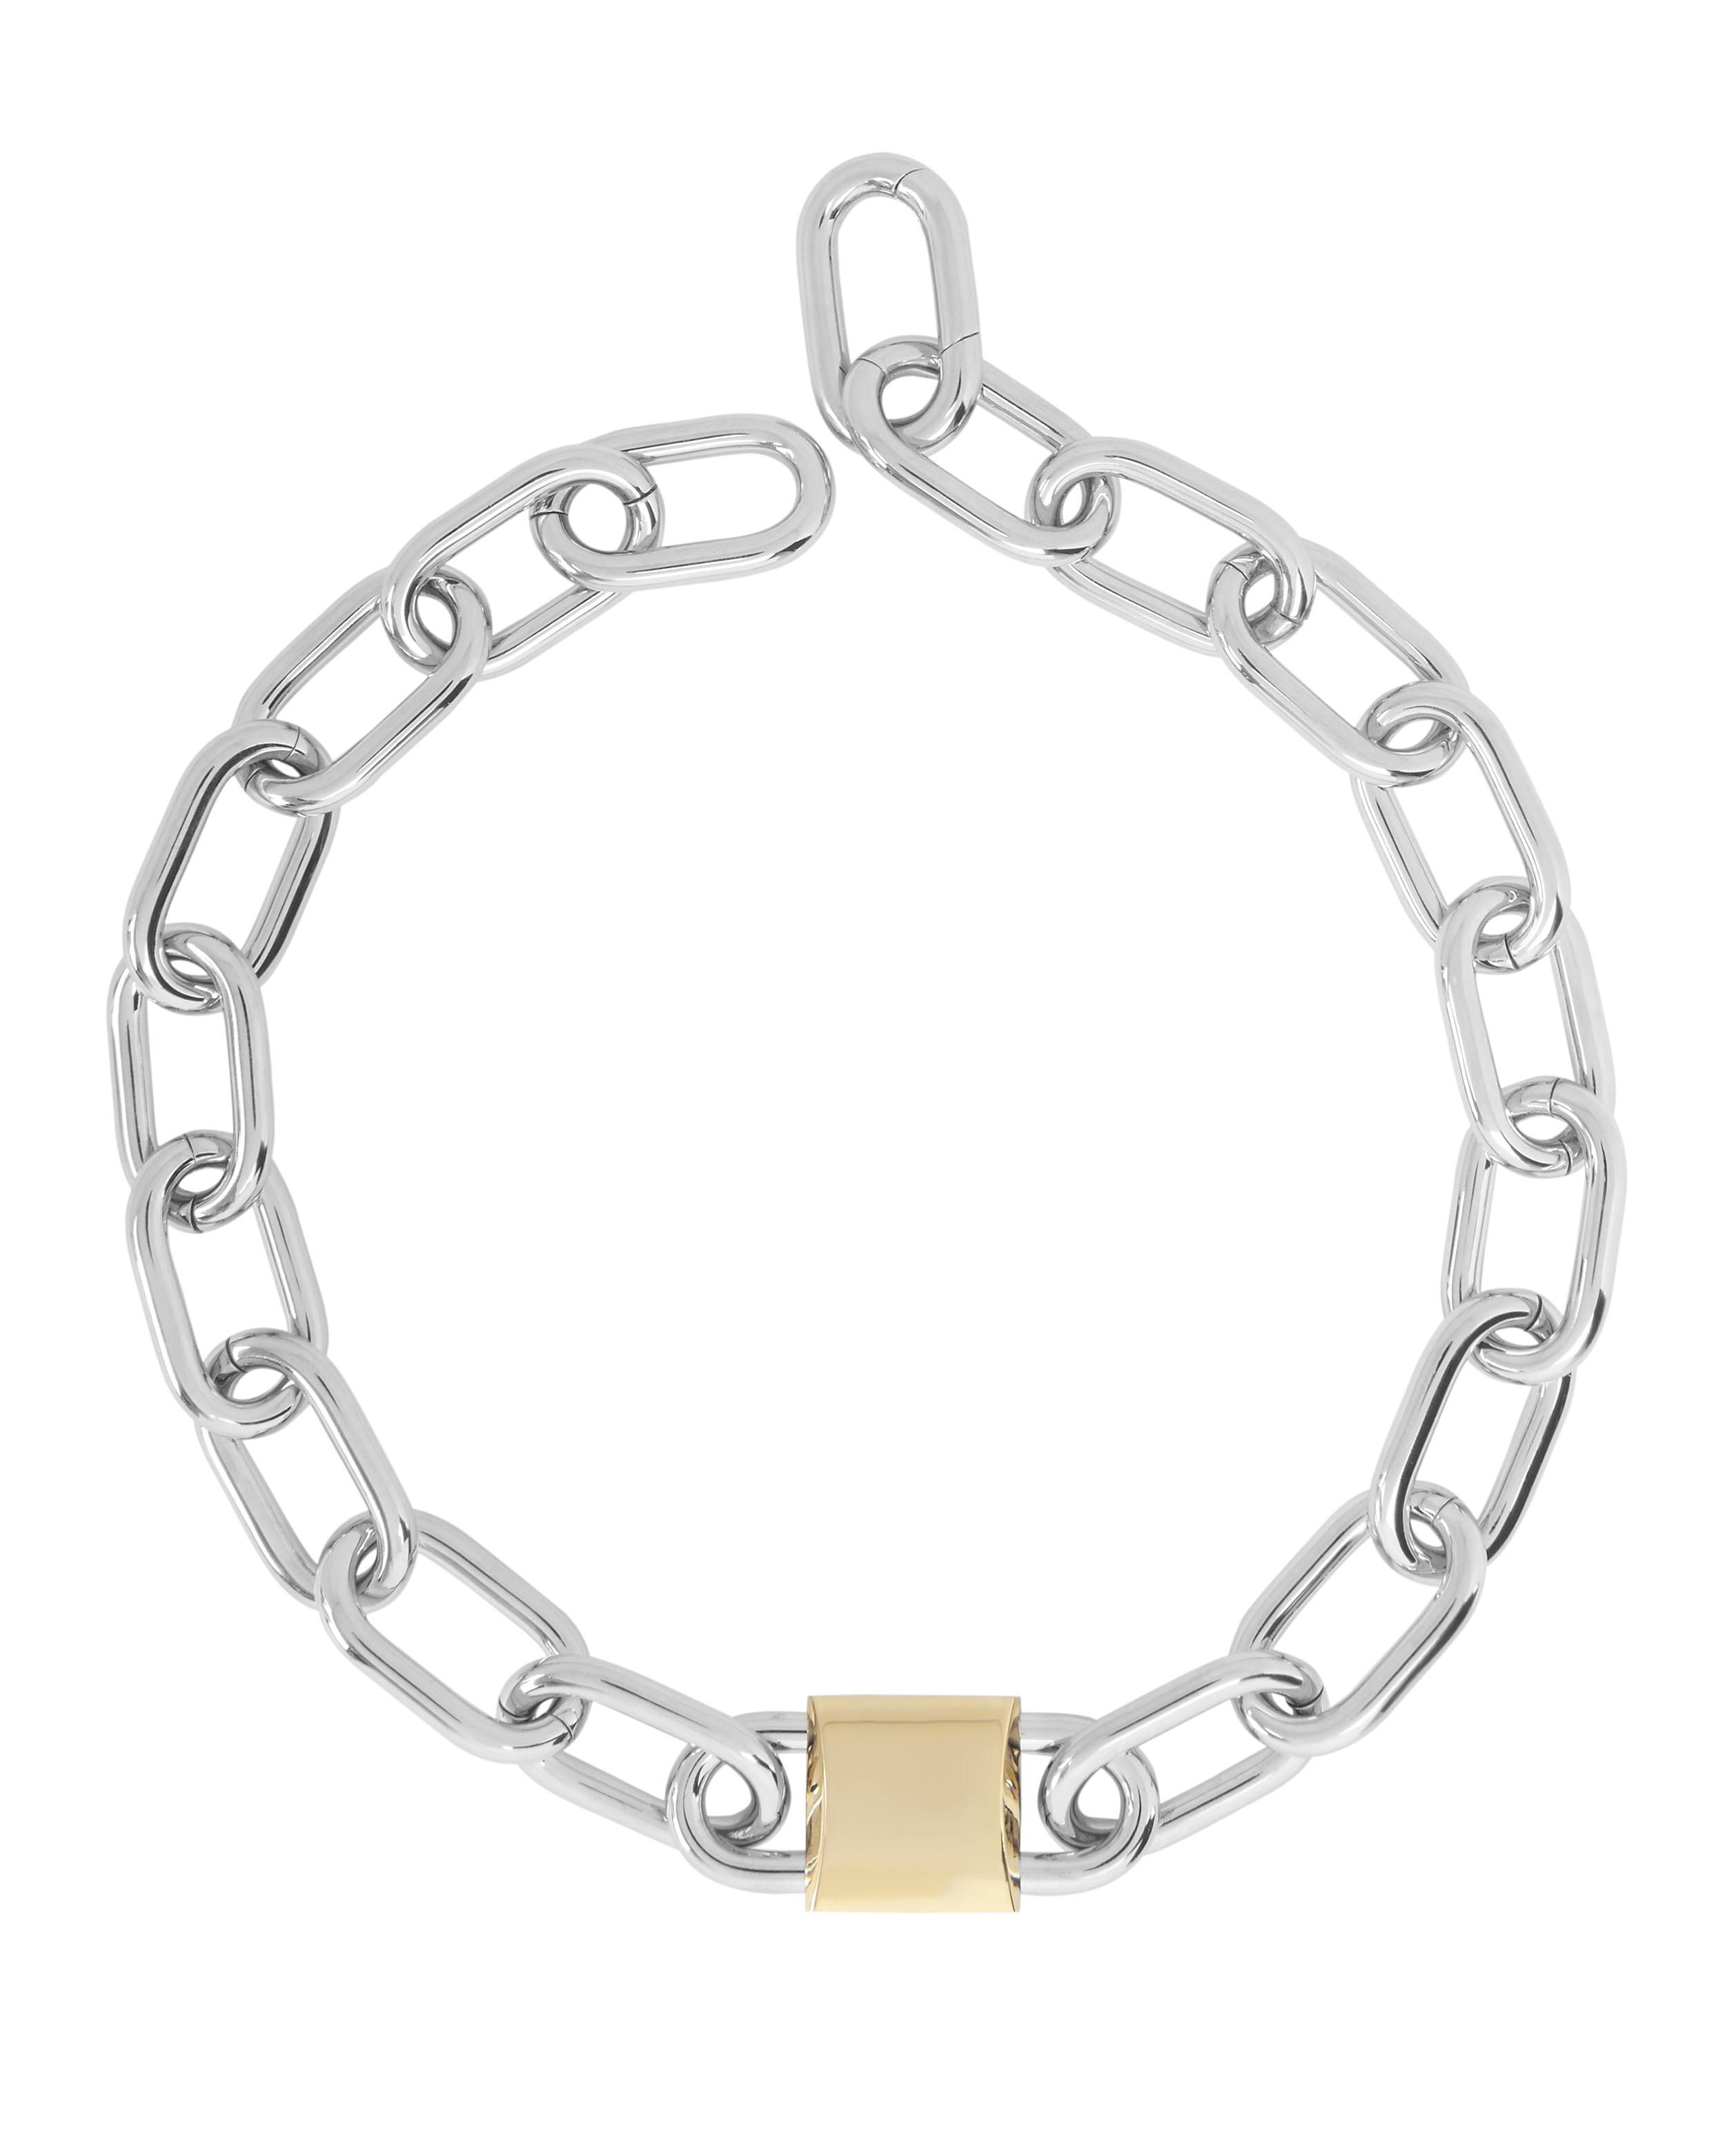 Alexander Wang Double Lock Link Chain Necklace in Metallic | Lyst